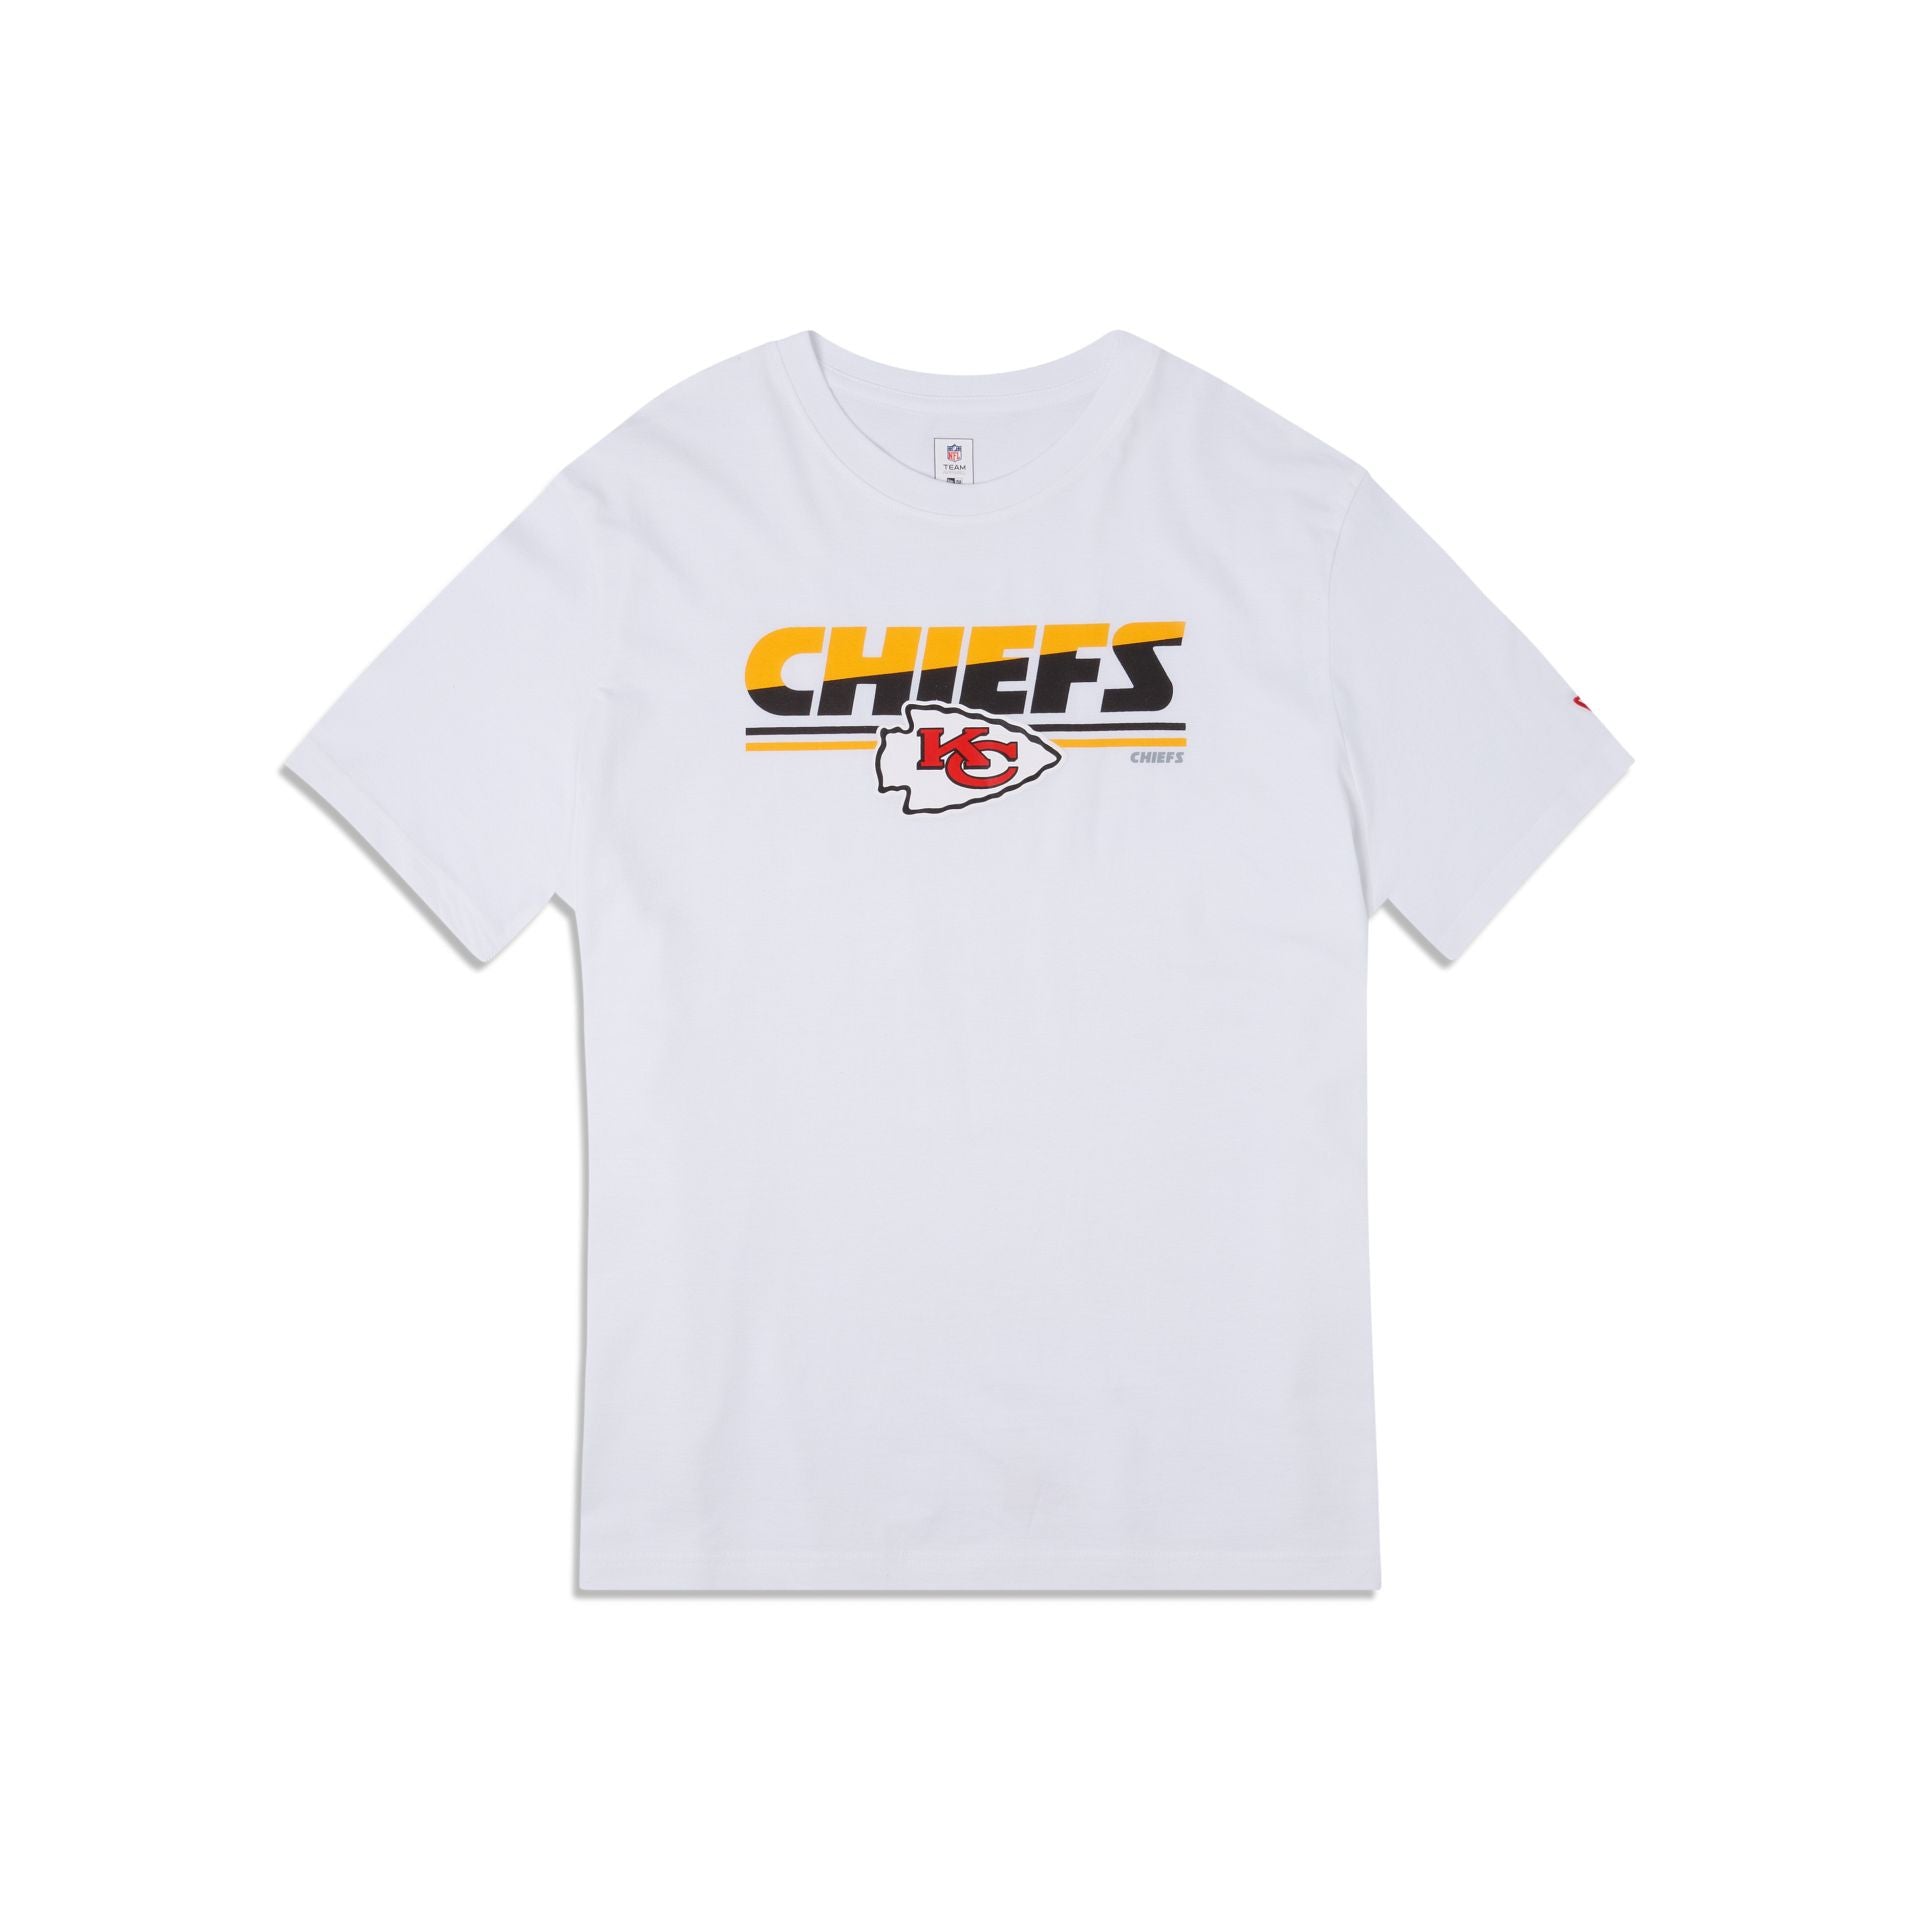 Kansas City Chiefs T-Shirts in Kansas City Chiefs Team Shop